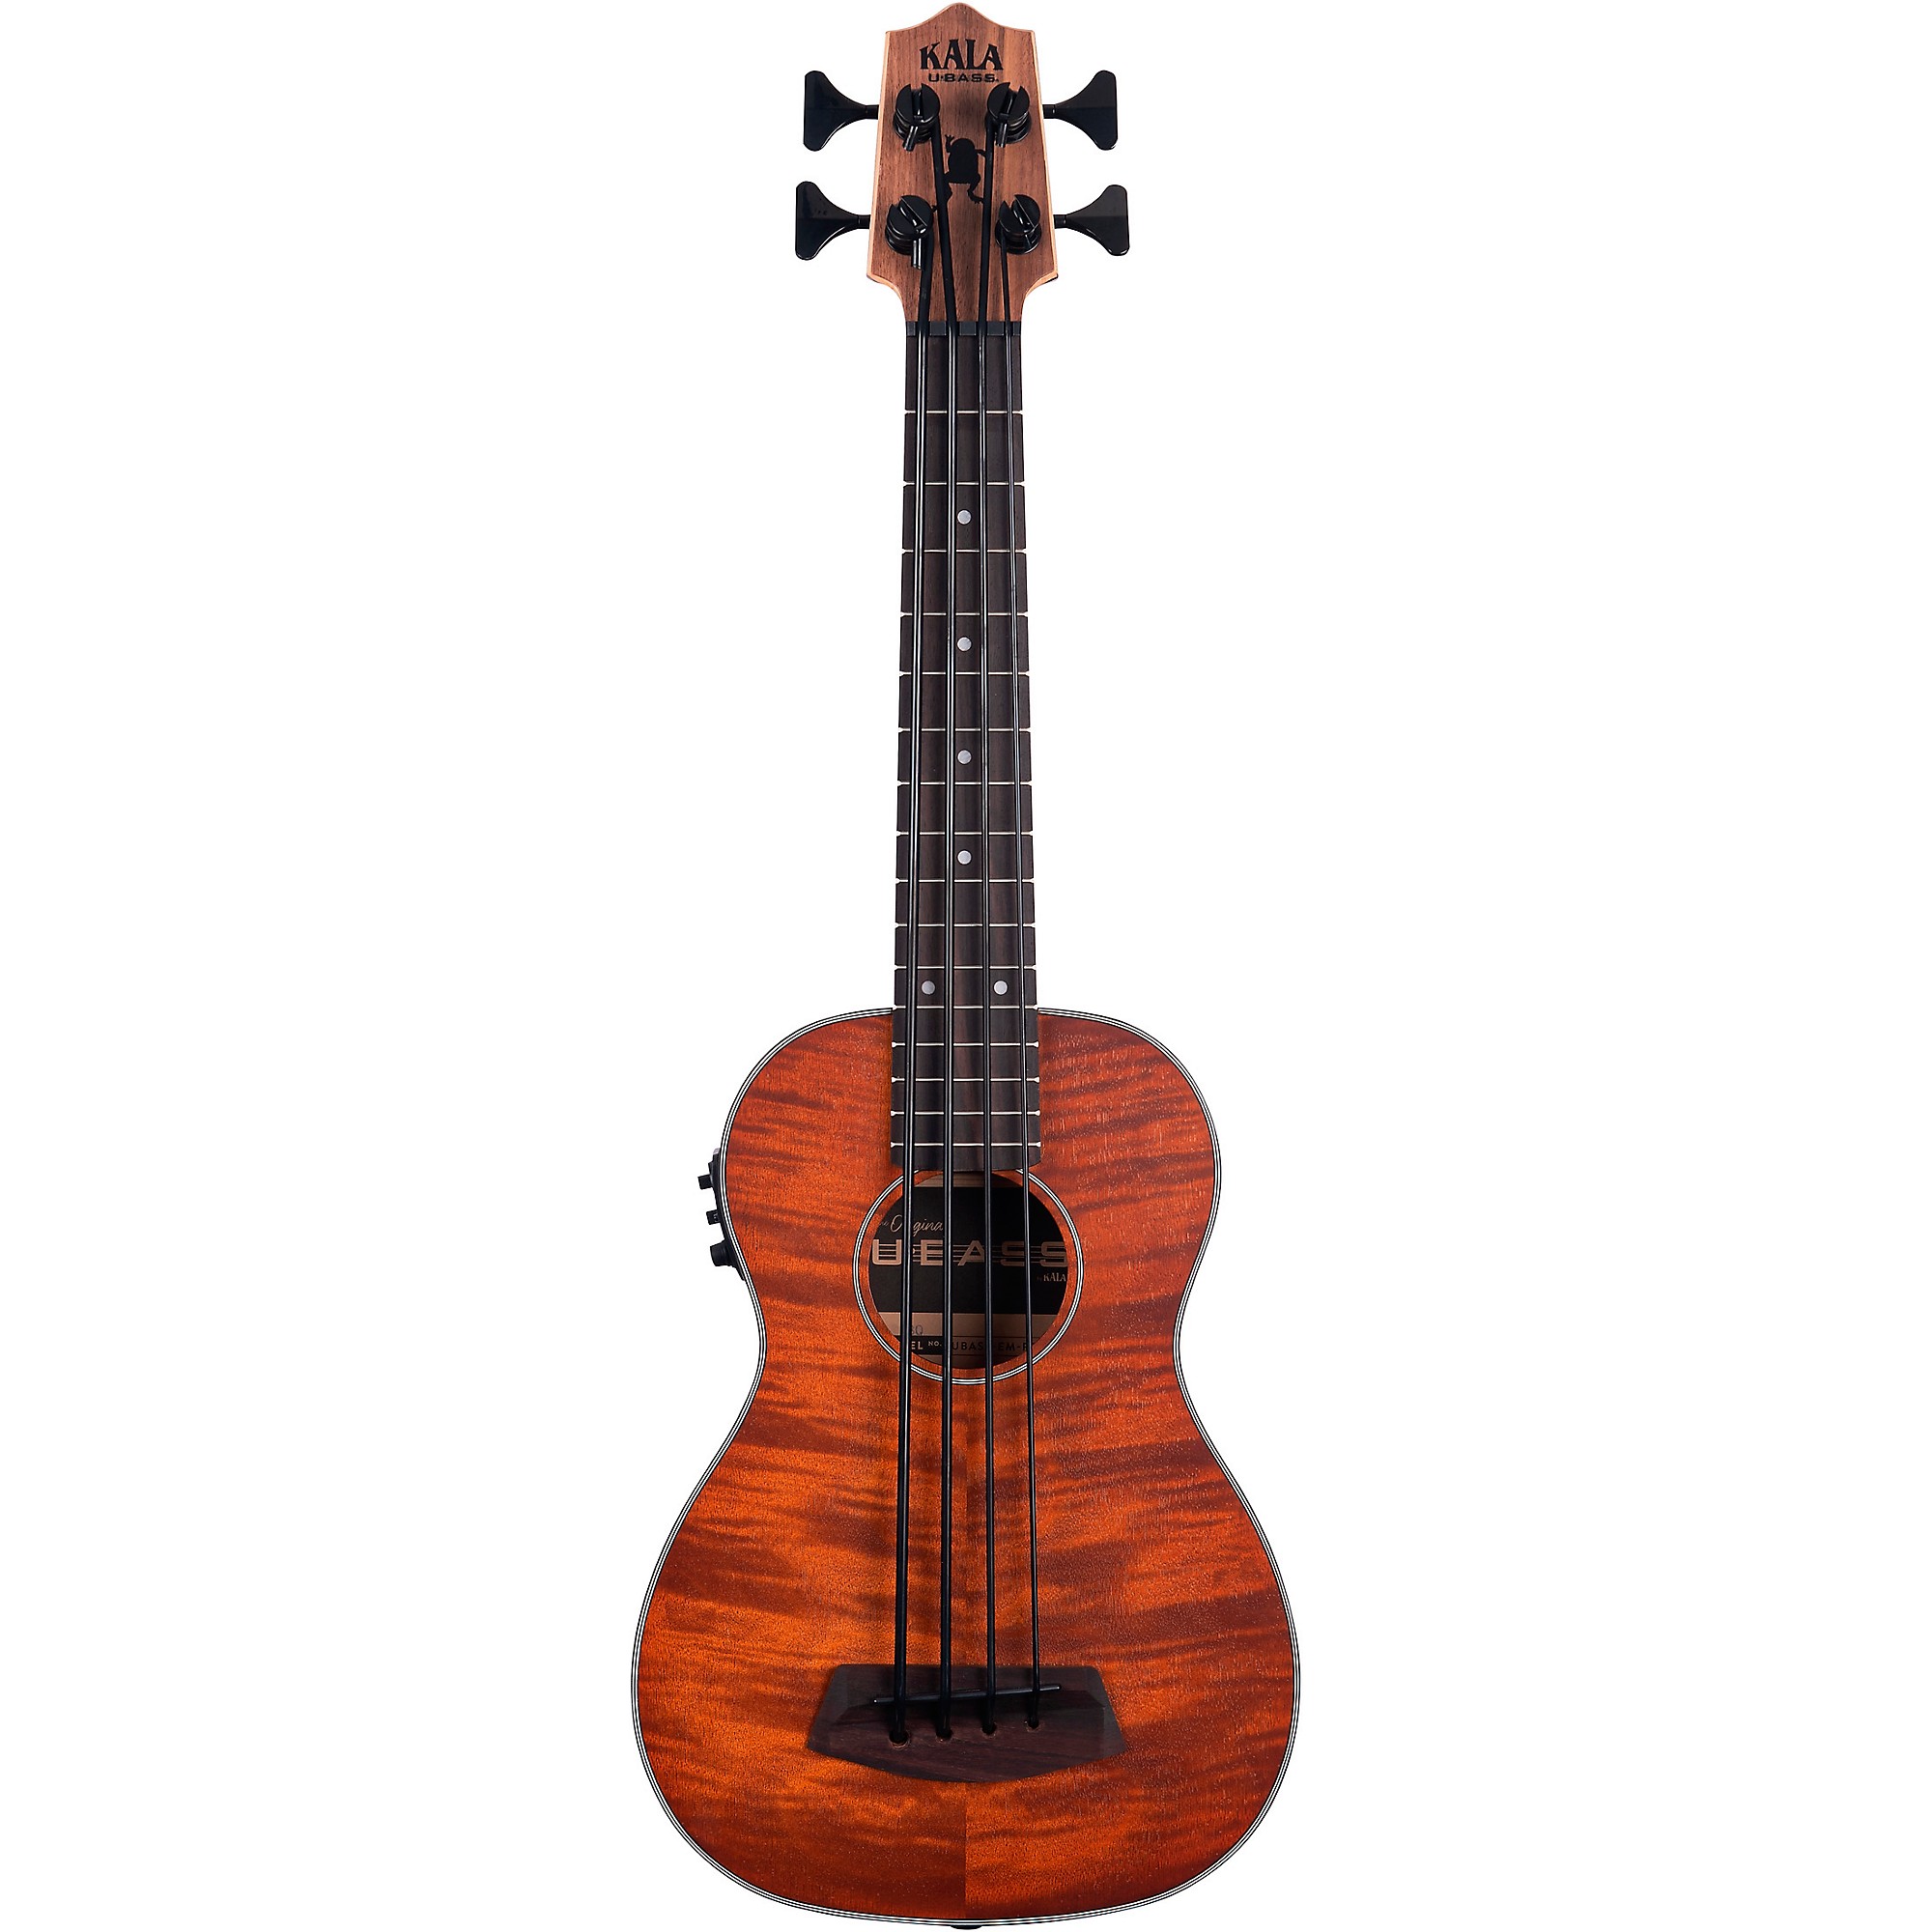 Kala Exotic Mahogany Акустически-Электрическая U-Bass Natural kala ka pwc kala pacific walnut concert ukulele